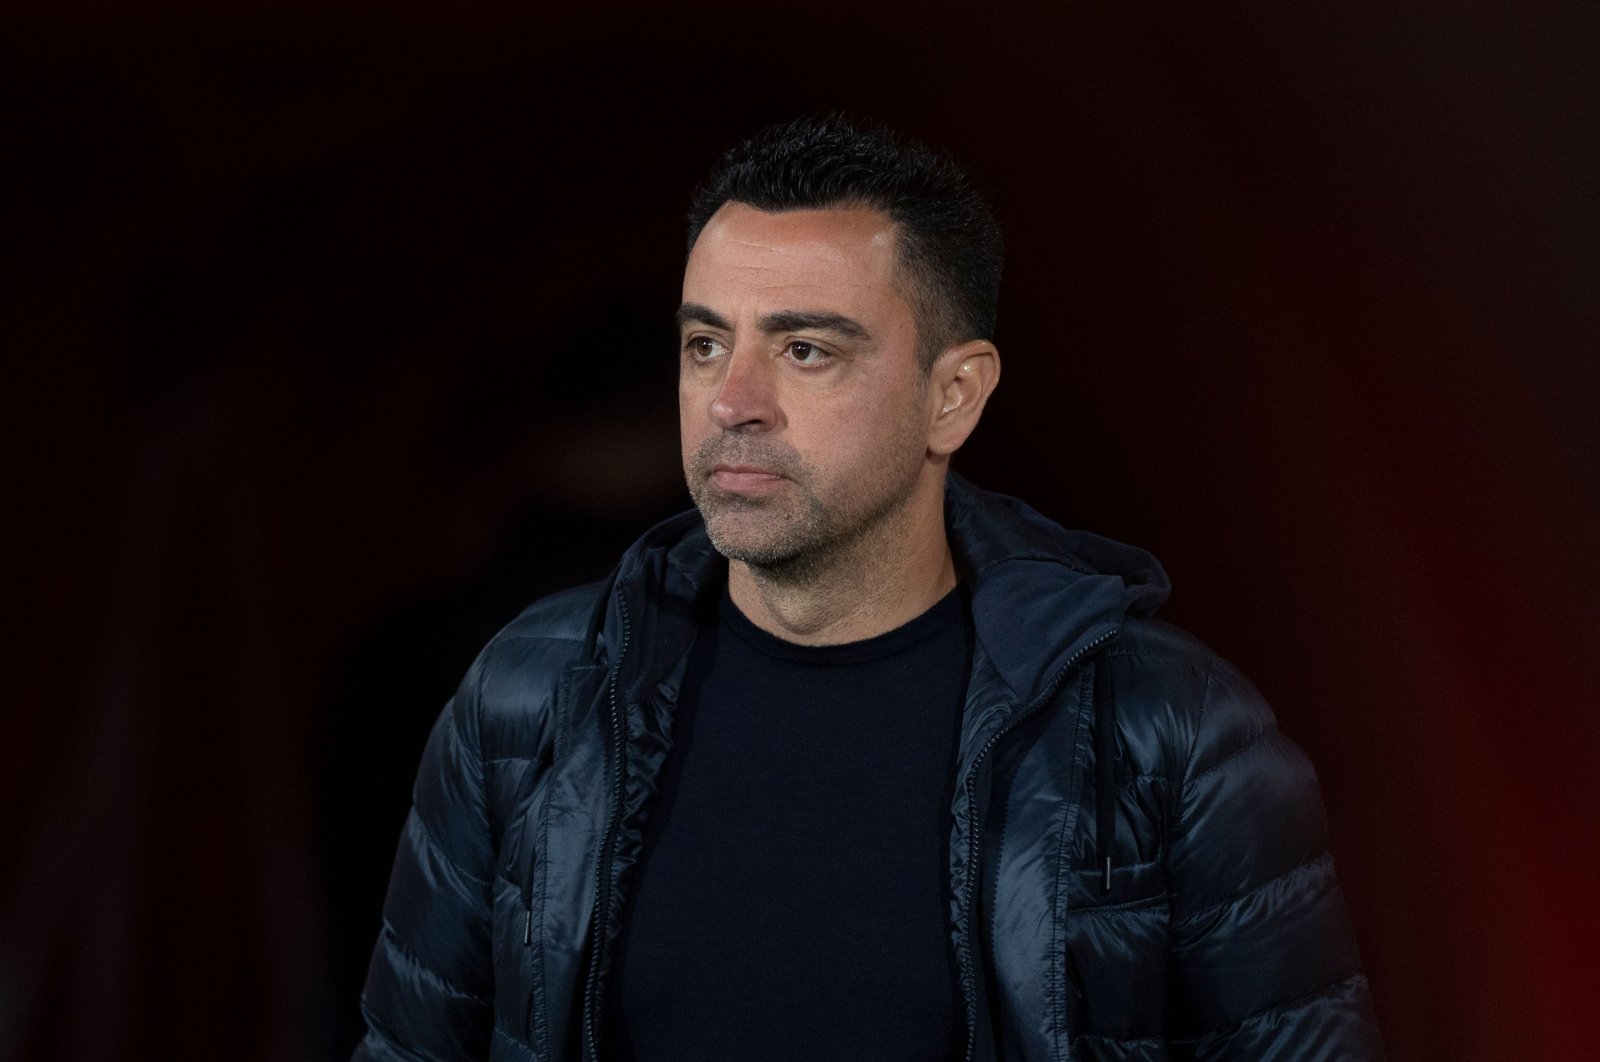 Barcelona sack coach Xavi Hernandez following subpar season